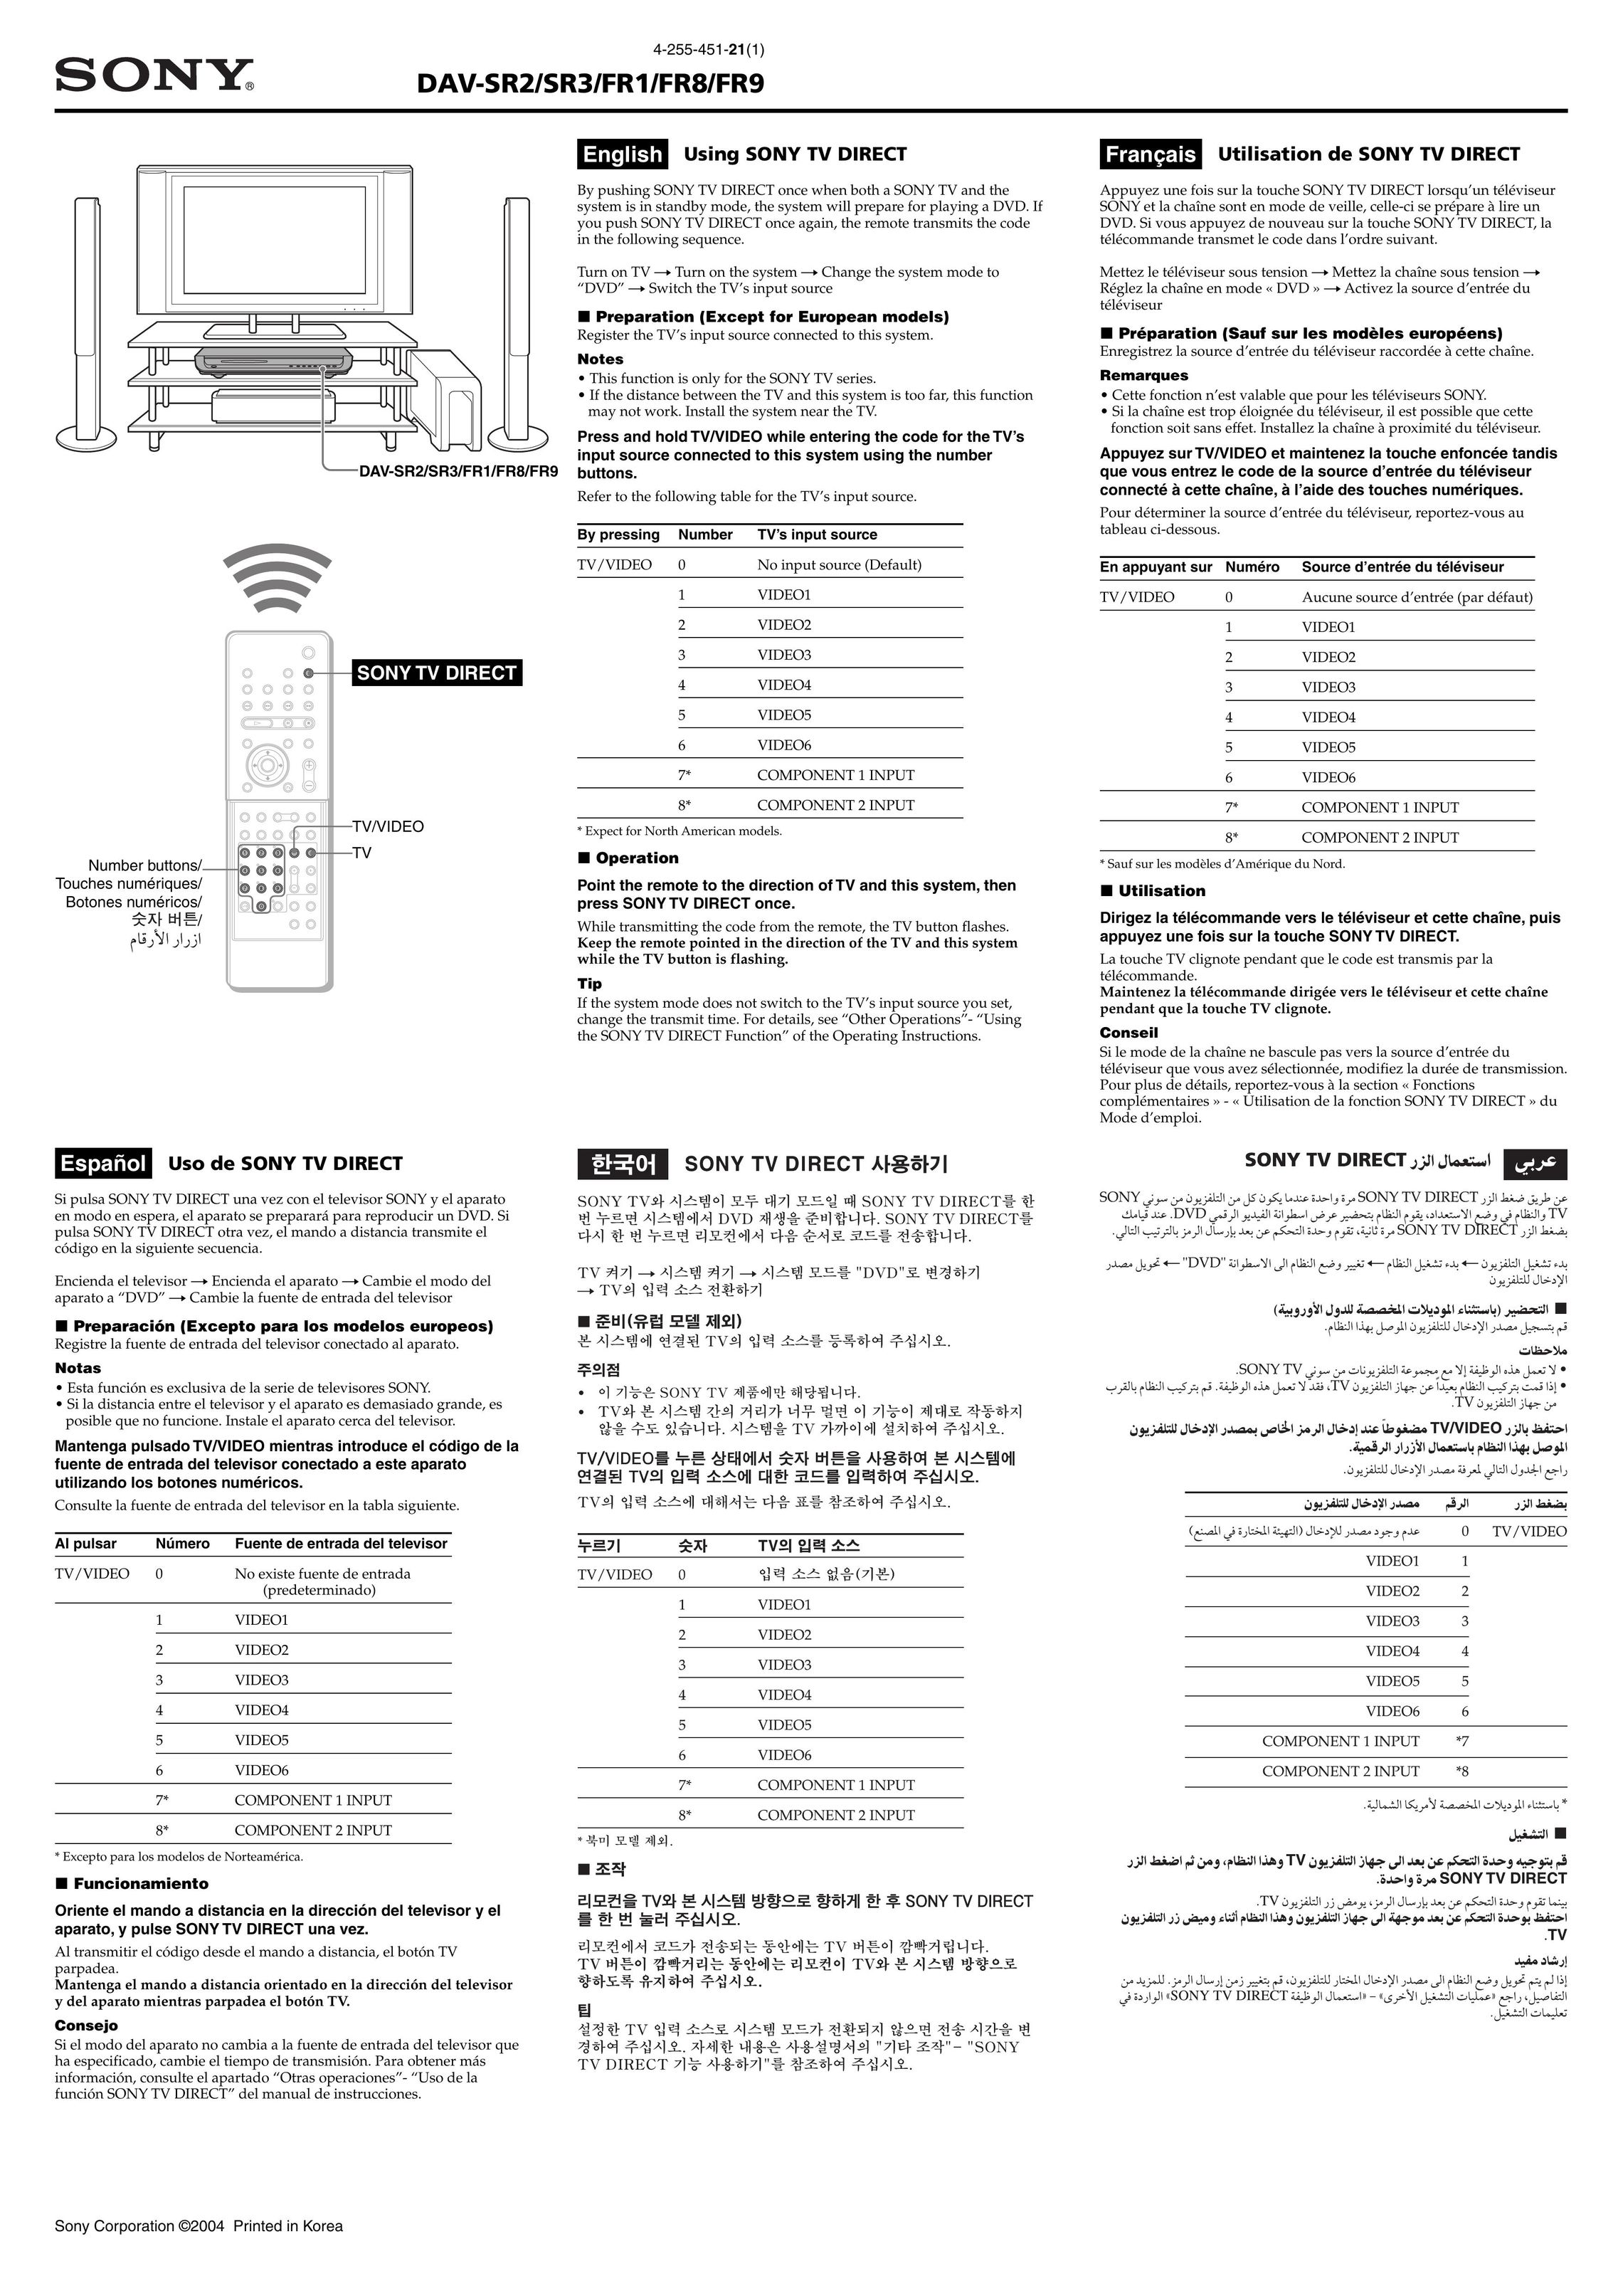 Sony DAV-SR3 Universal Remote User Manual